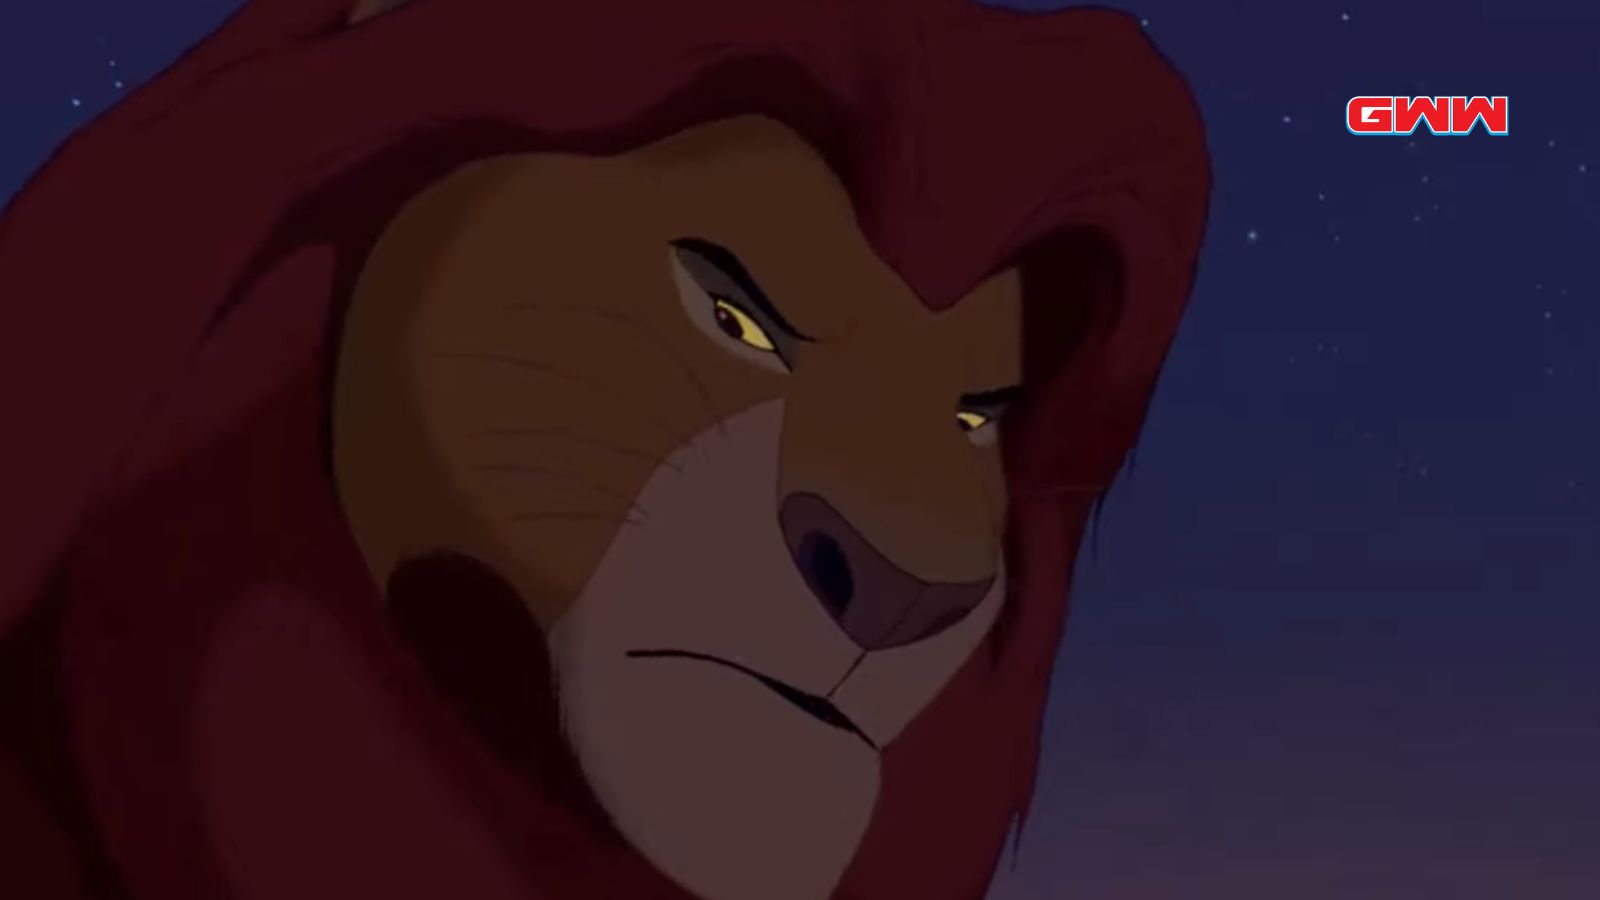 Mufasa looking down at Simba because he disobeyed him.